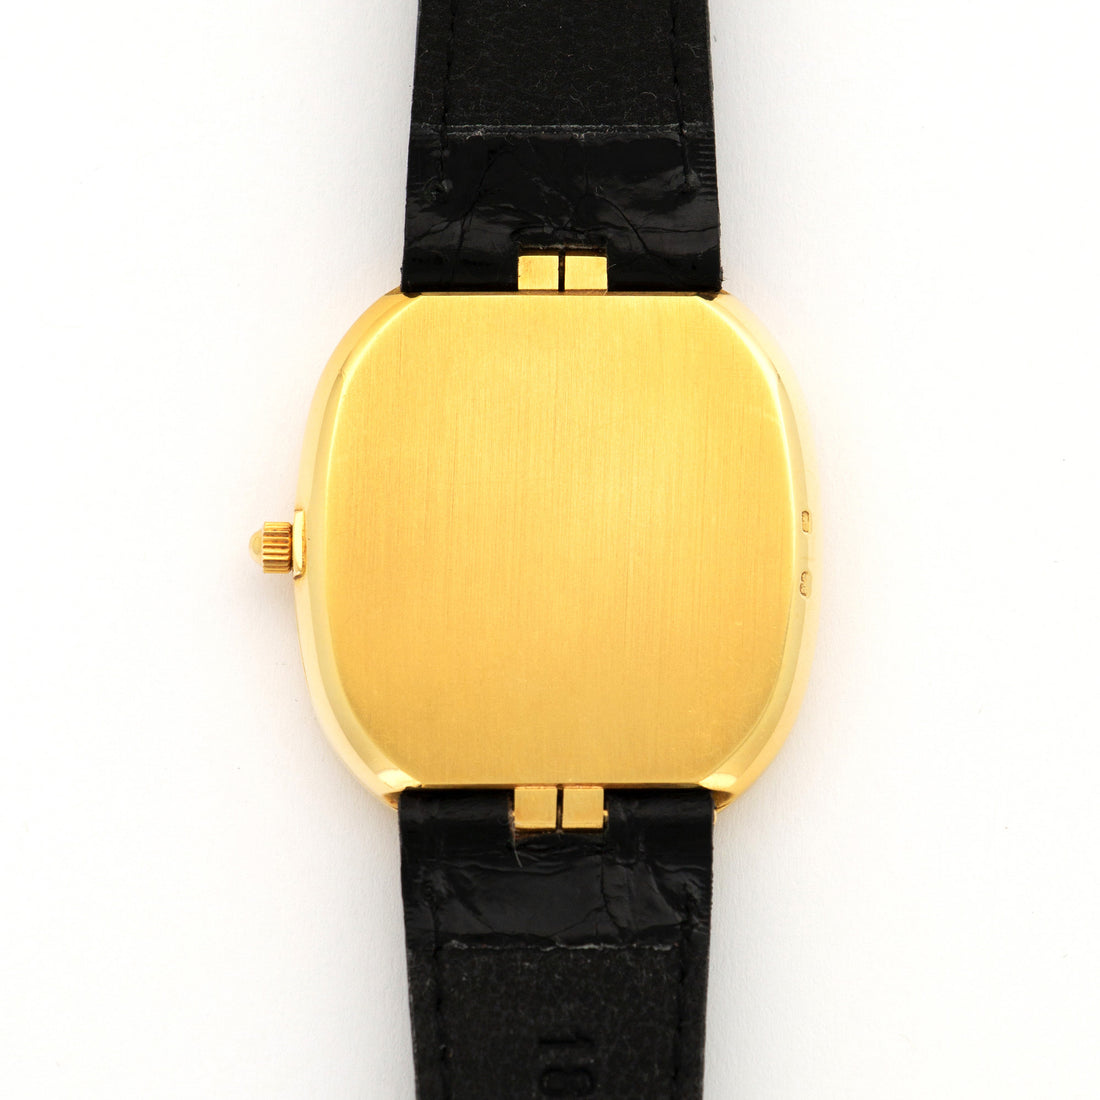 Patek Philippe Yellow Gold Ellipse Automatic Watch Ref. 3738